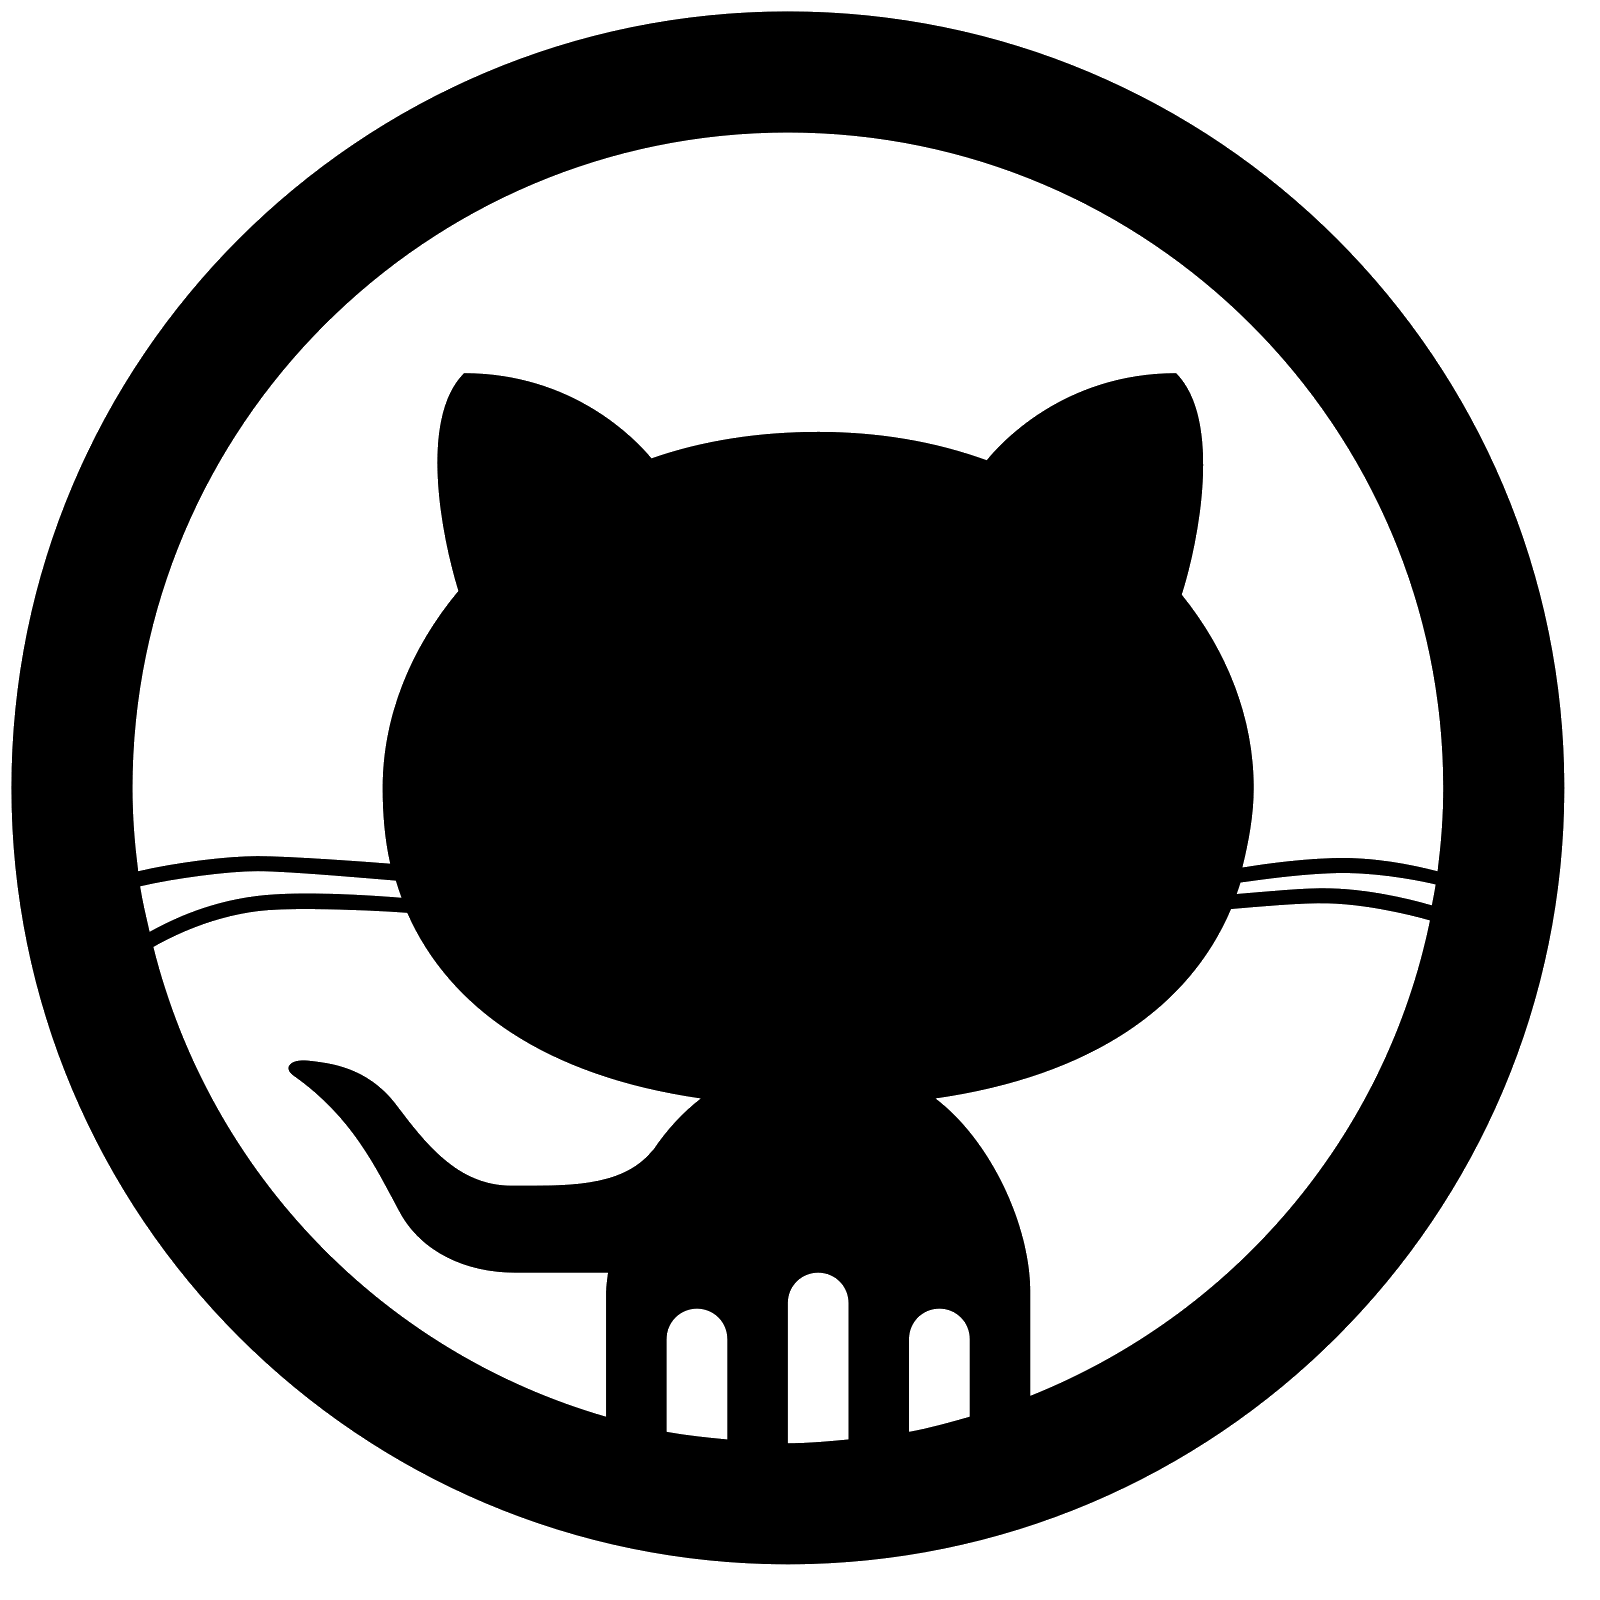 Black Github Logo Transparent Image